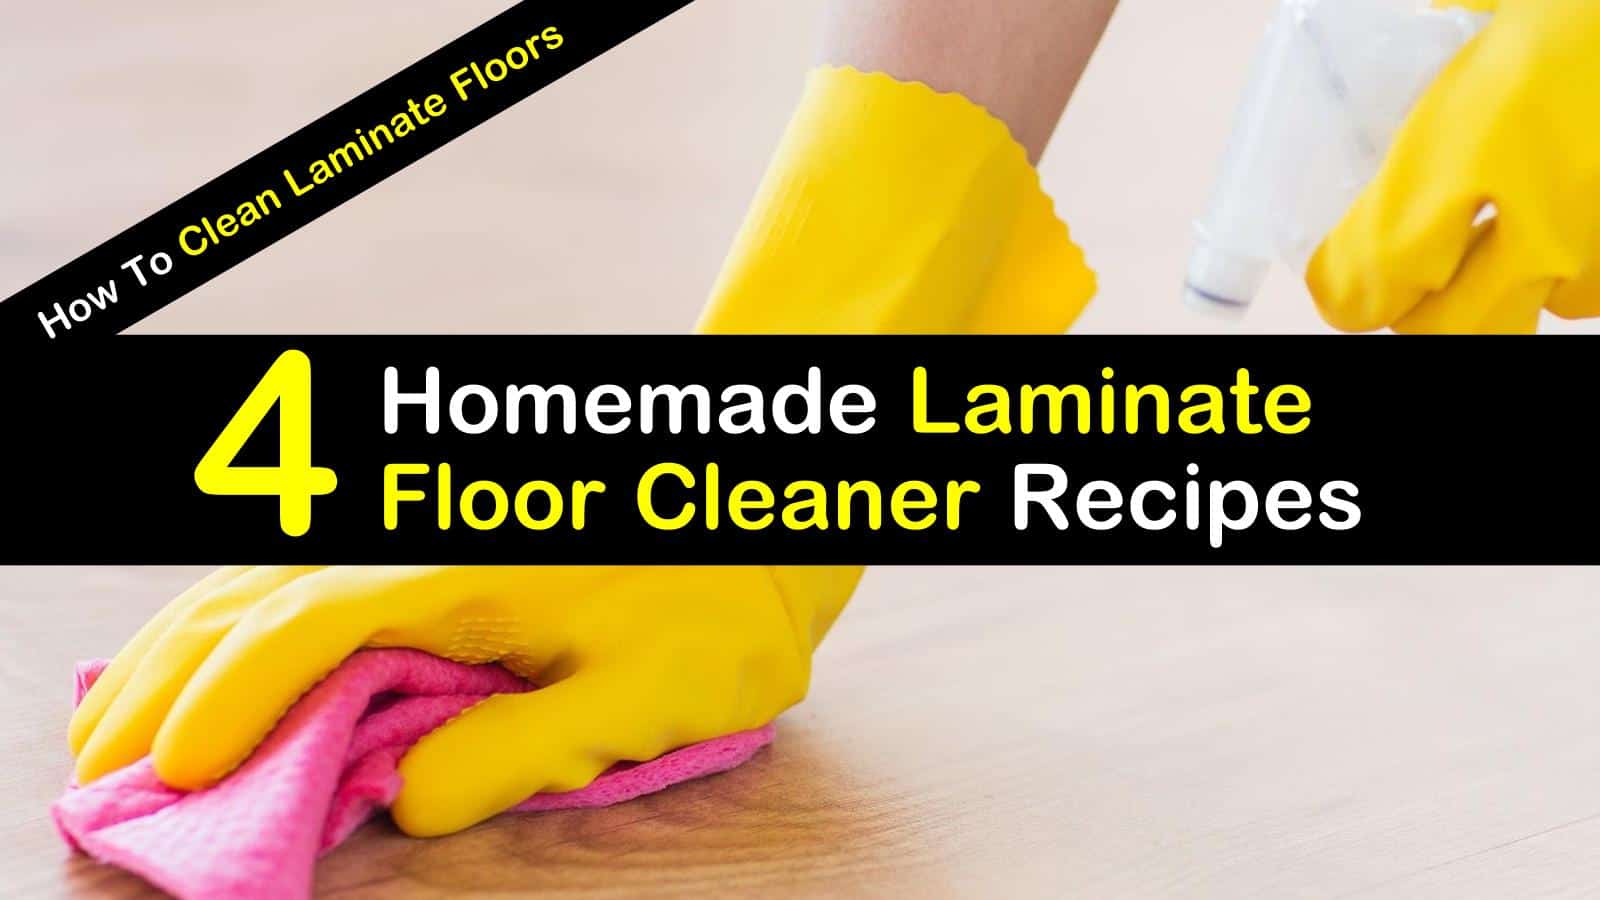 how to clean laminate floors titleimg1